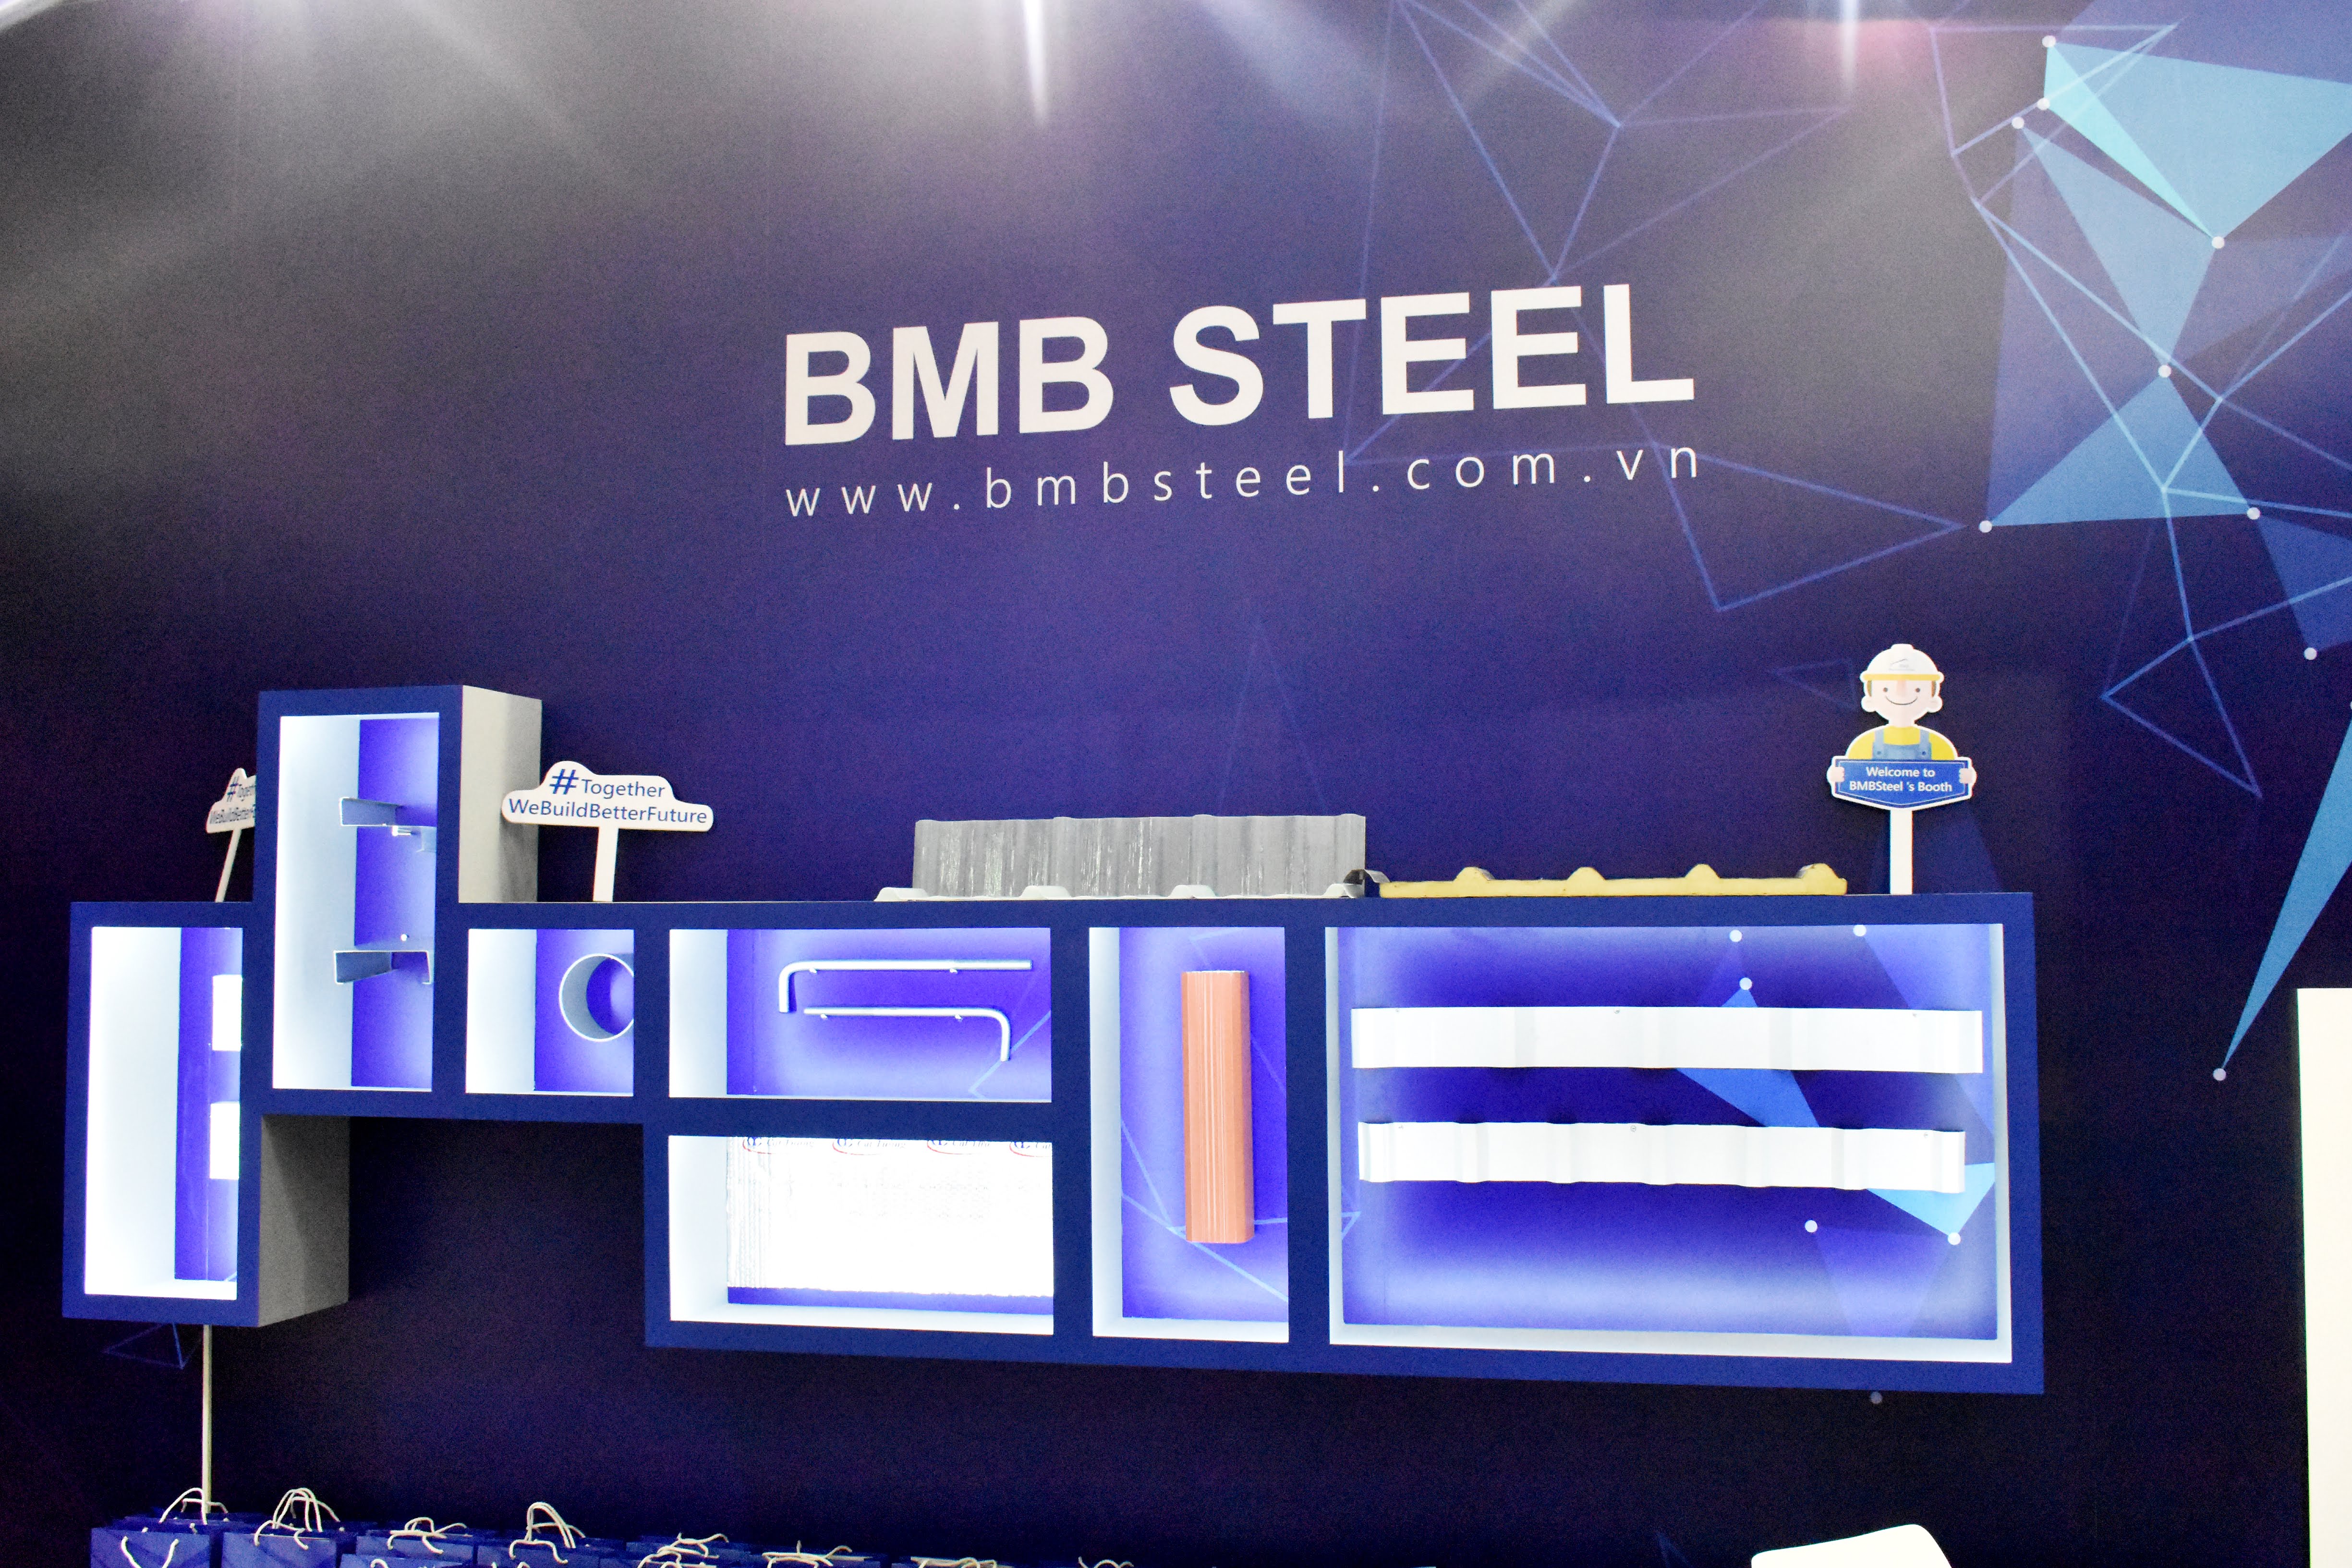 BMB Steel participated Thai Architect'18 expo in Thailand 2